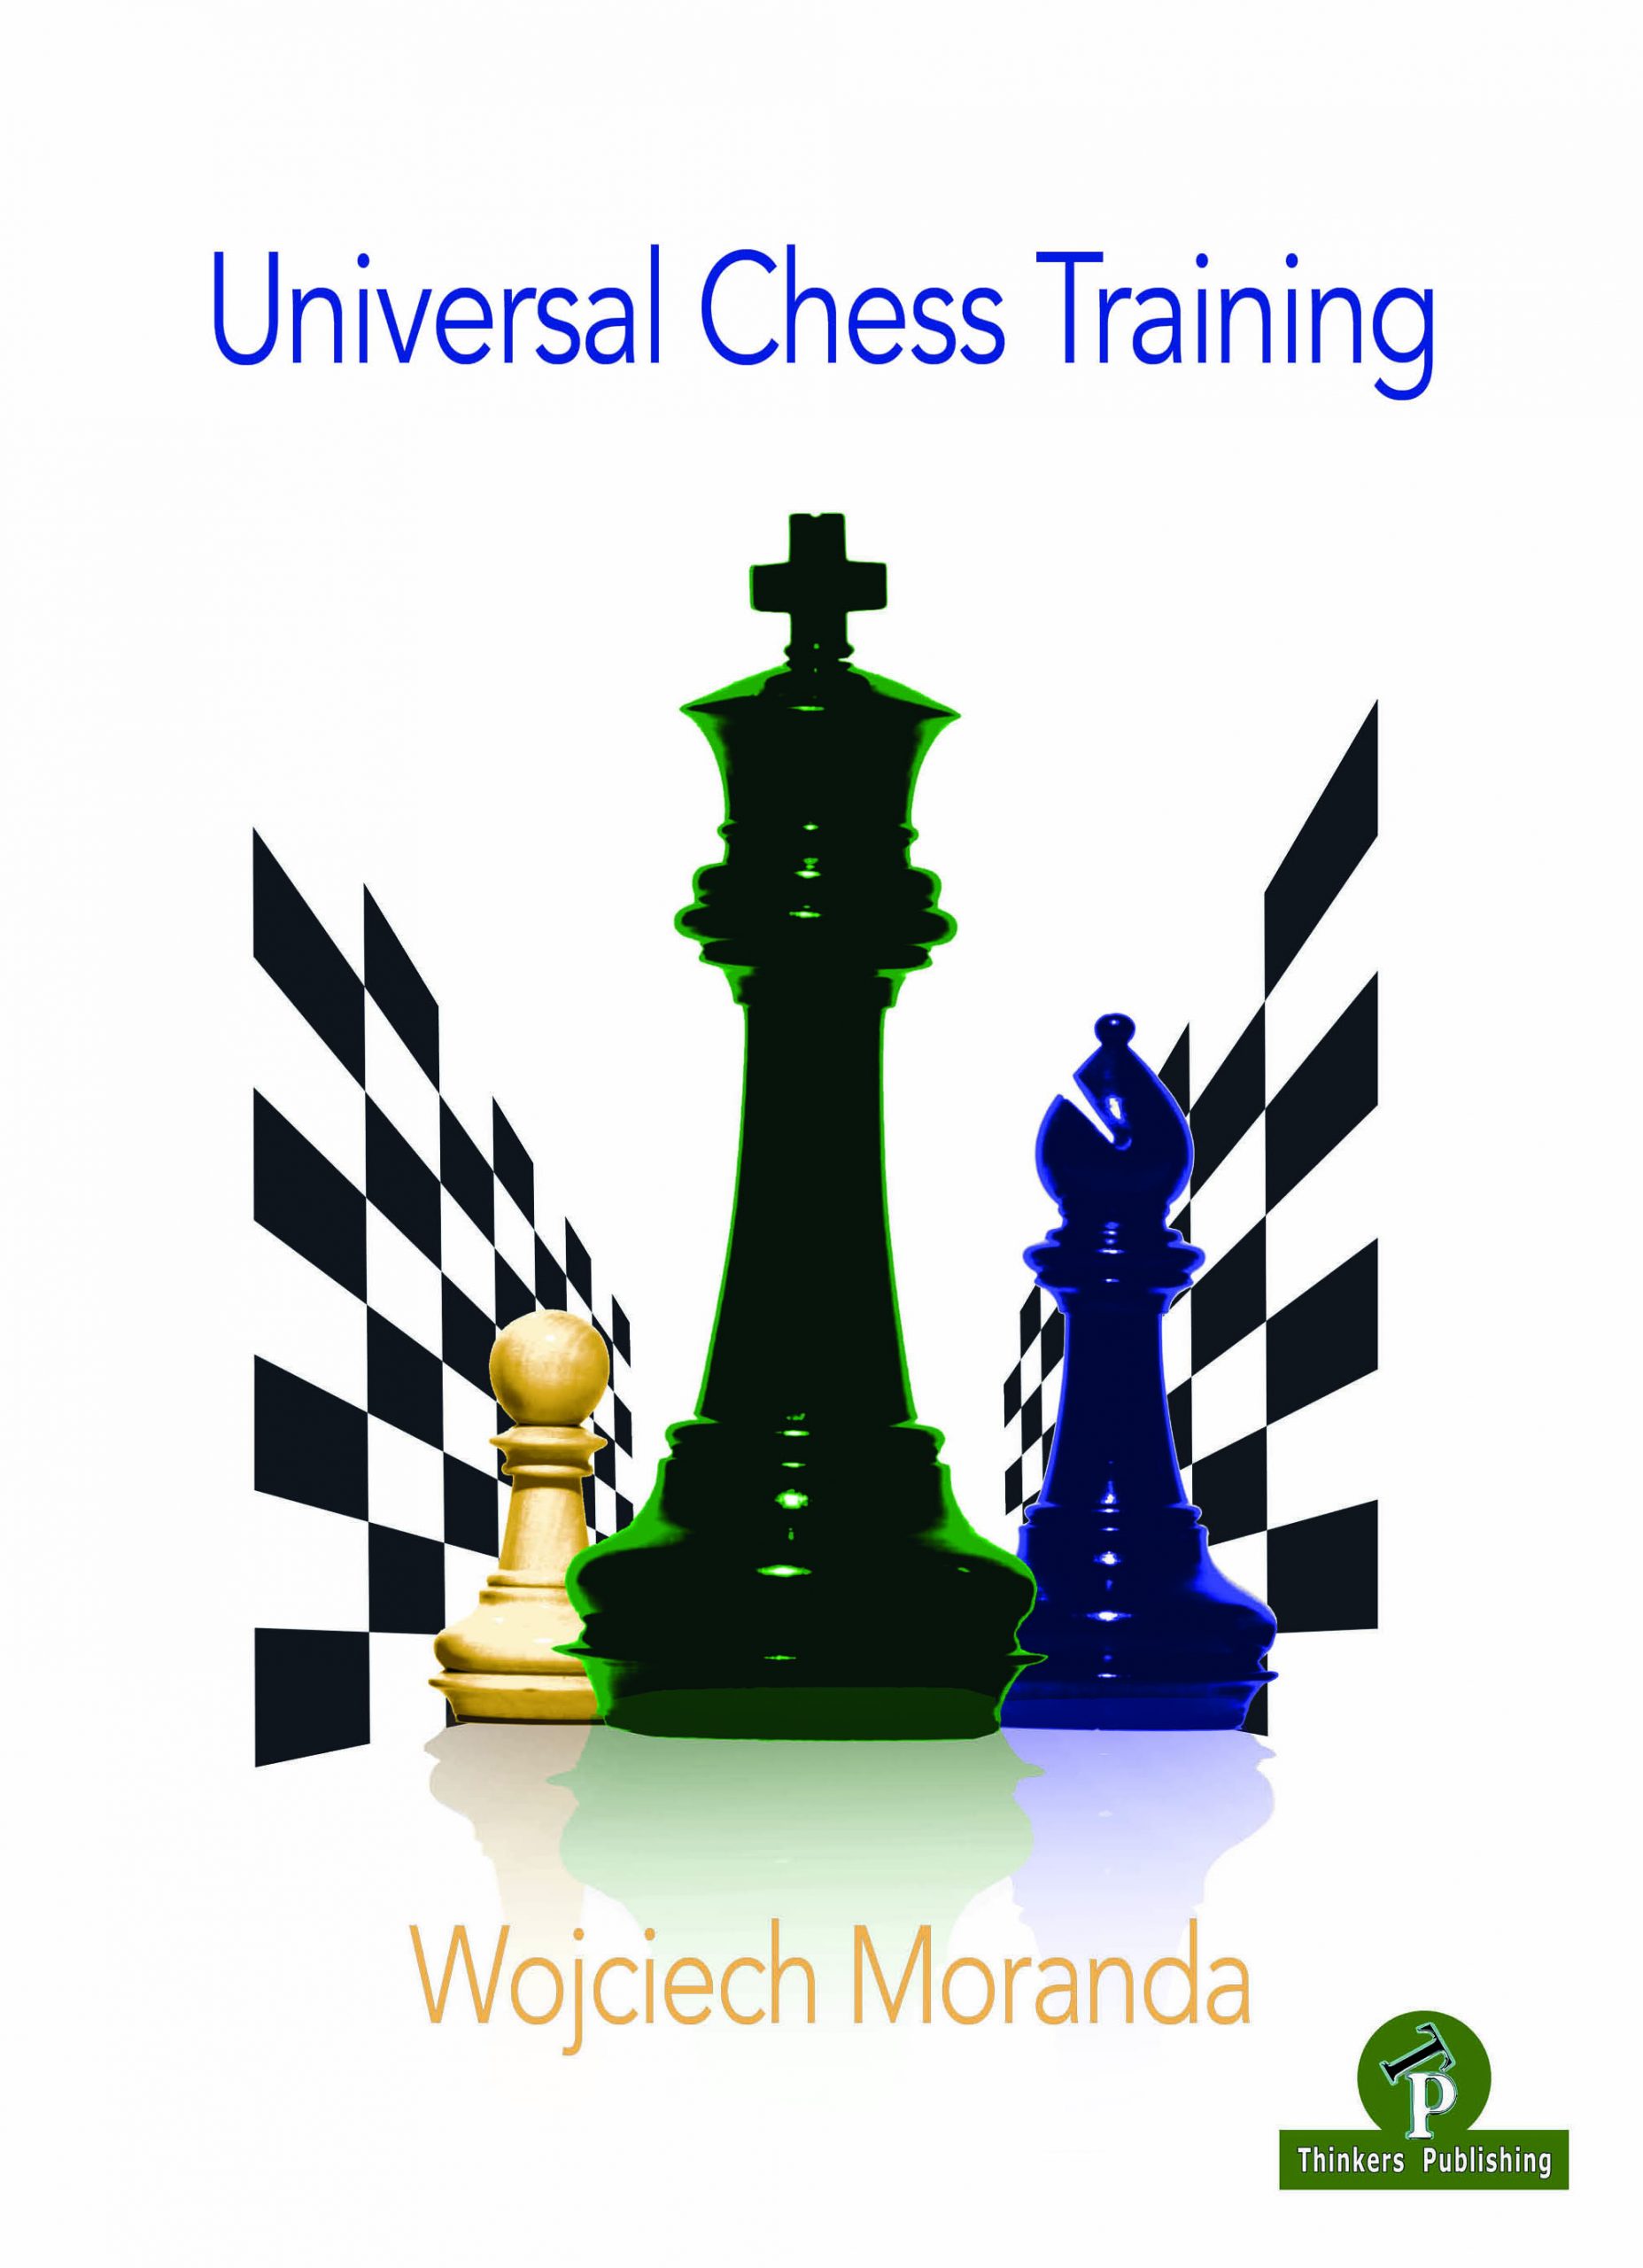 Grandmaster Chess School. Chess classes, lessons, workshops.